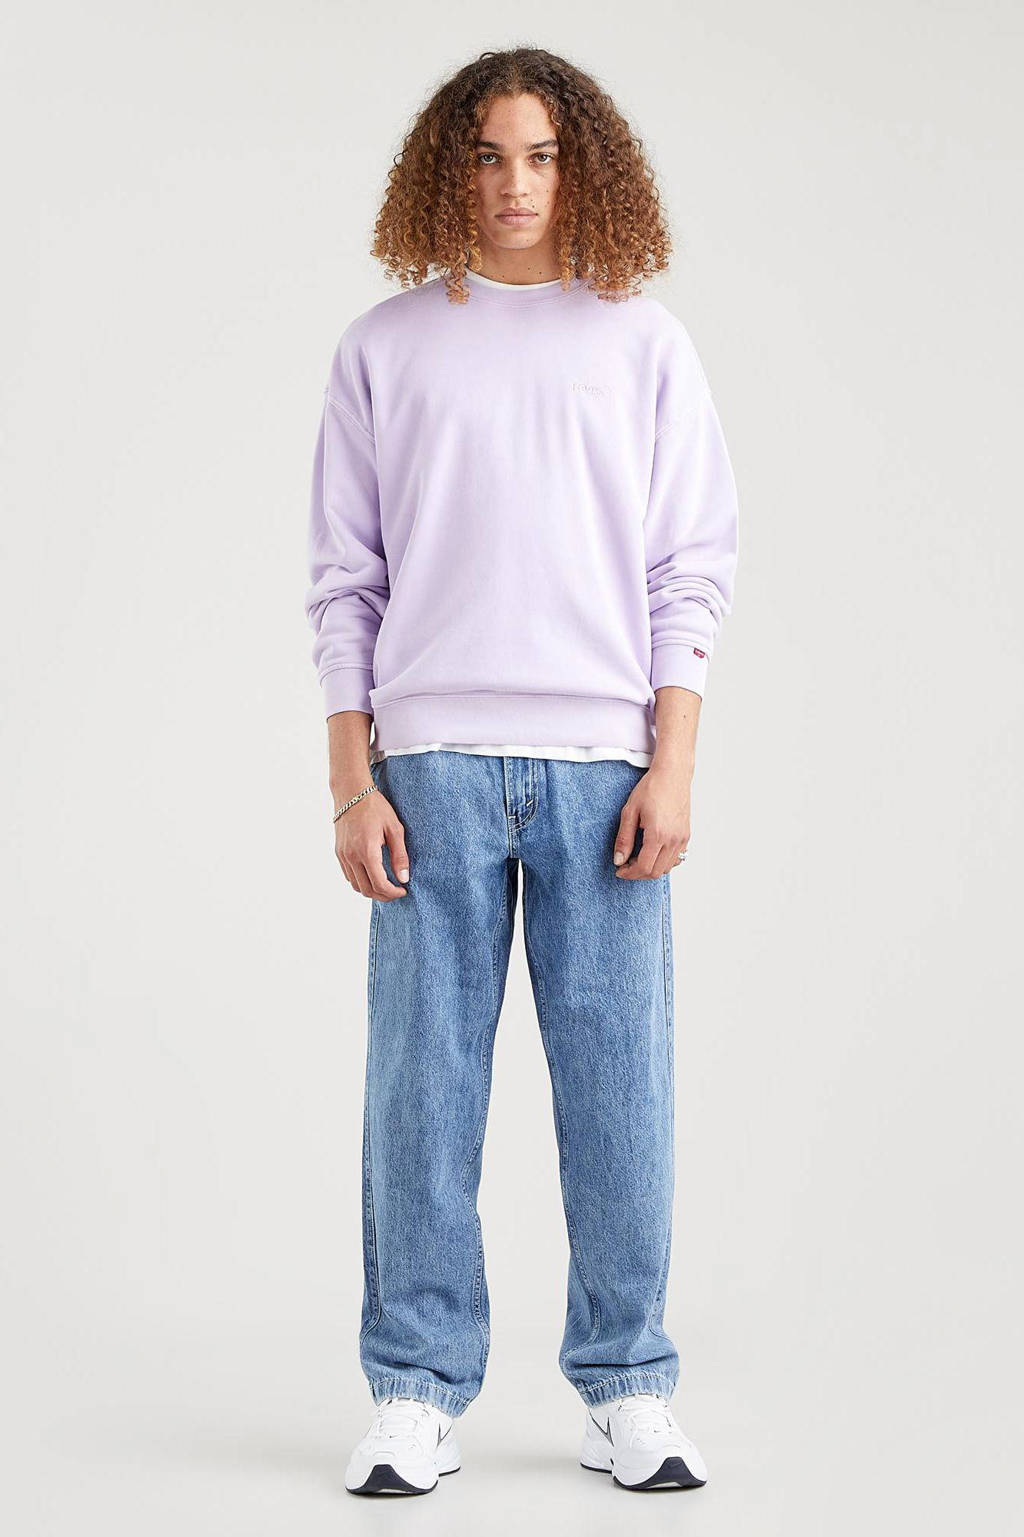 Levi's sweater natural dye violet